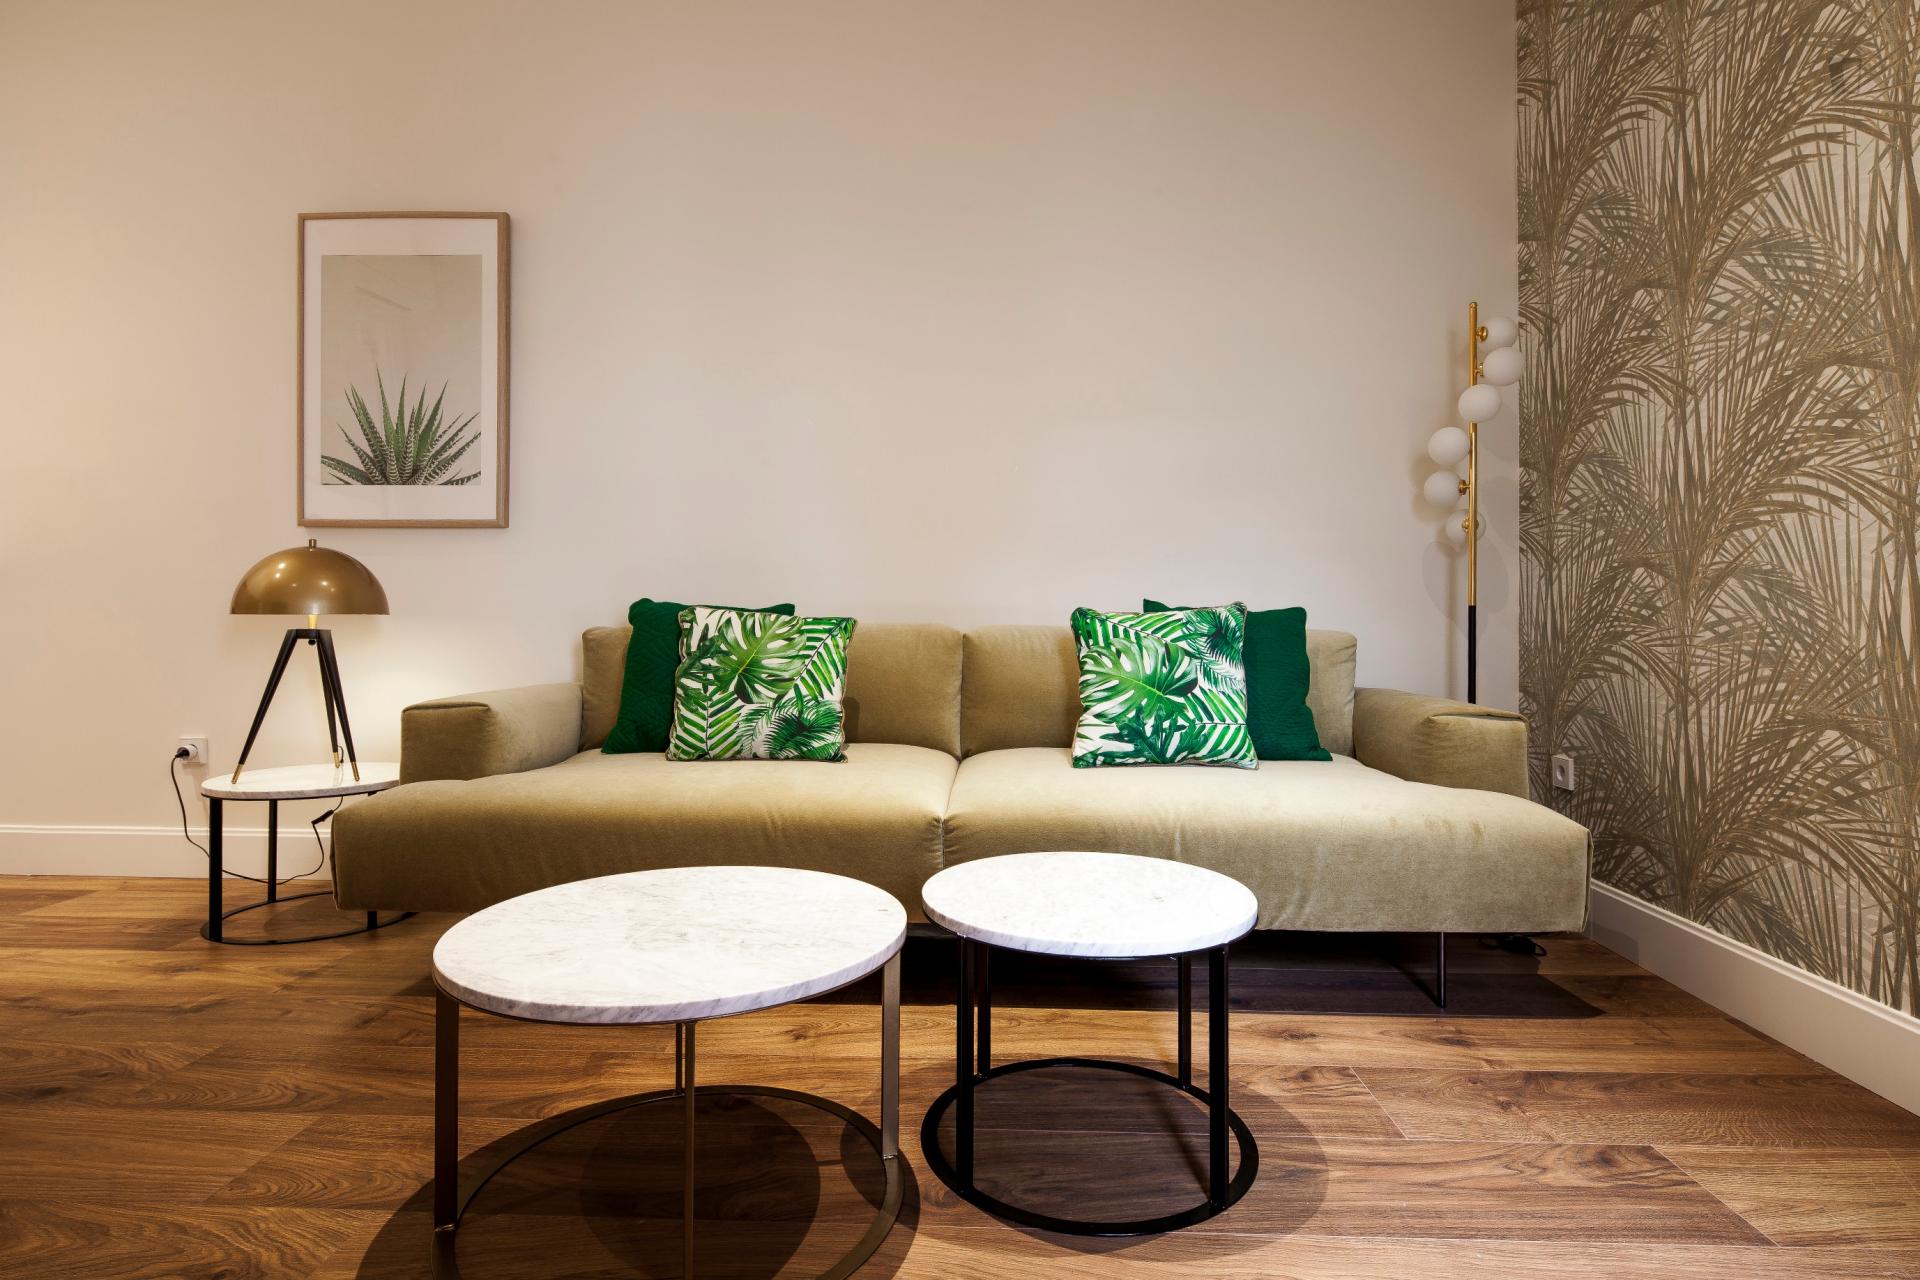 El Barco - Furnished luxury apartment Madrid